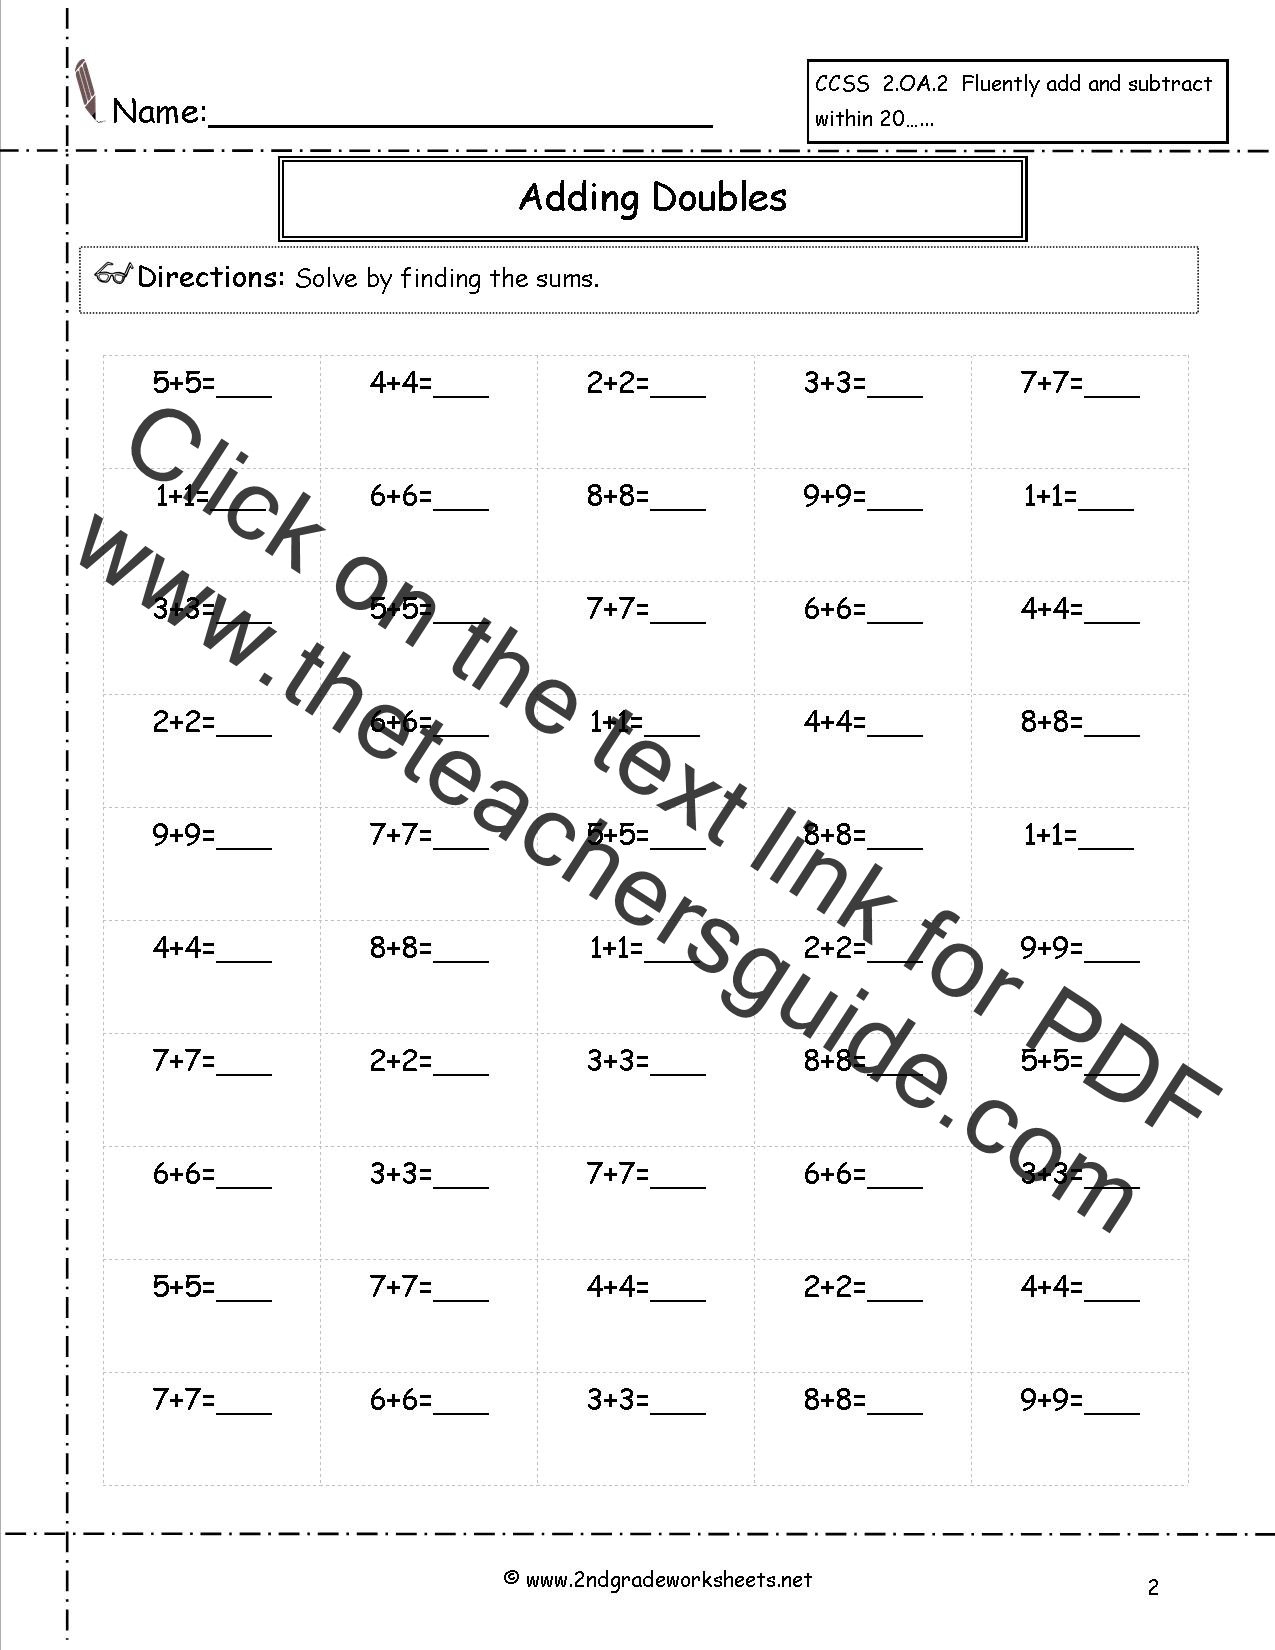 Free Printable Bar Model Worksheets